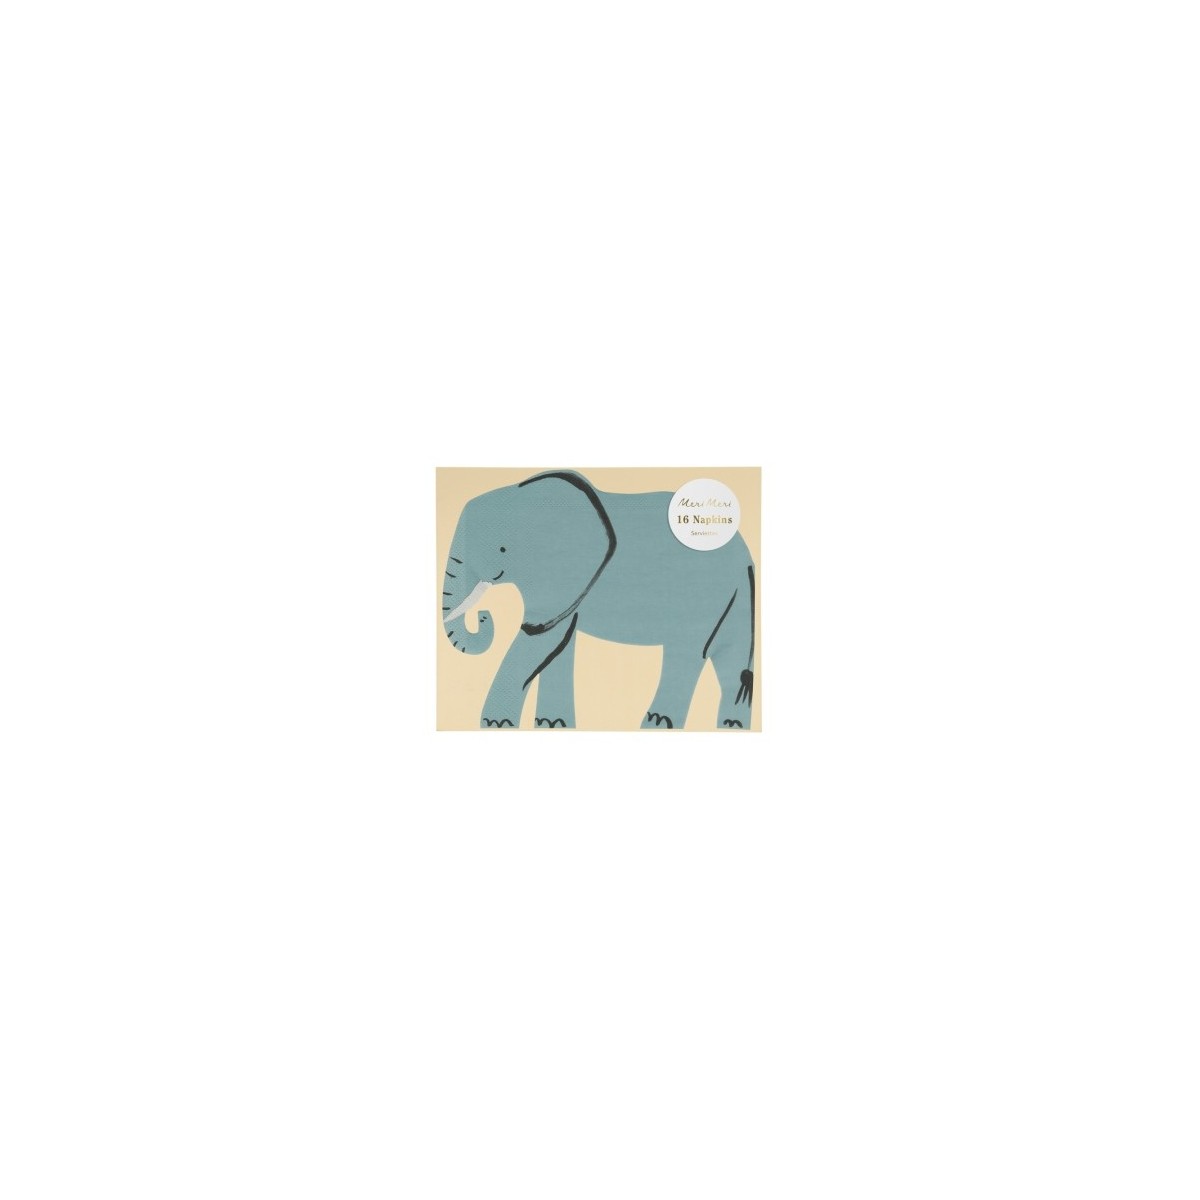 16 Serviettes Elephant Jungle Safari